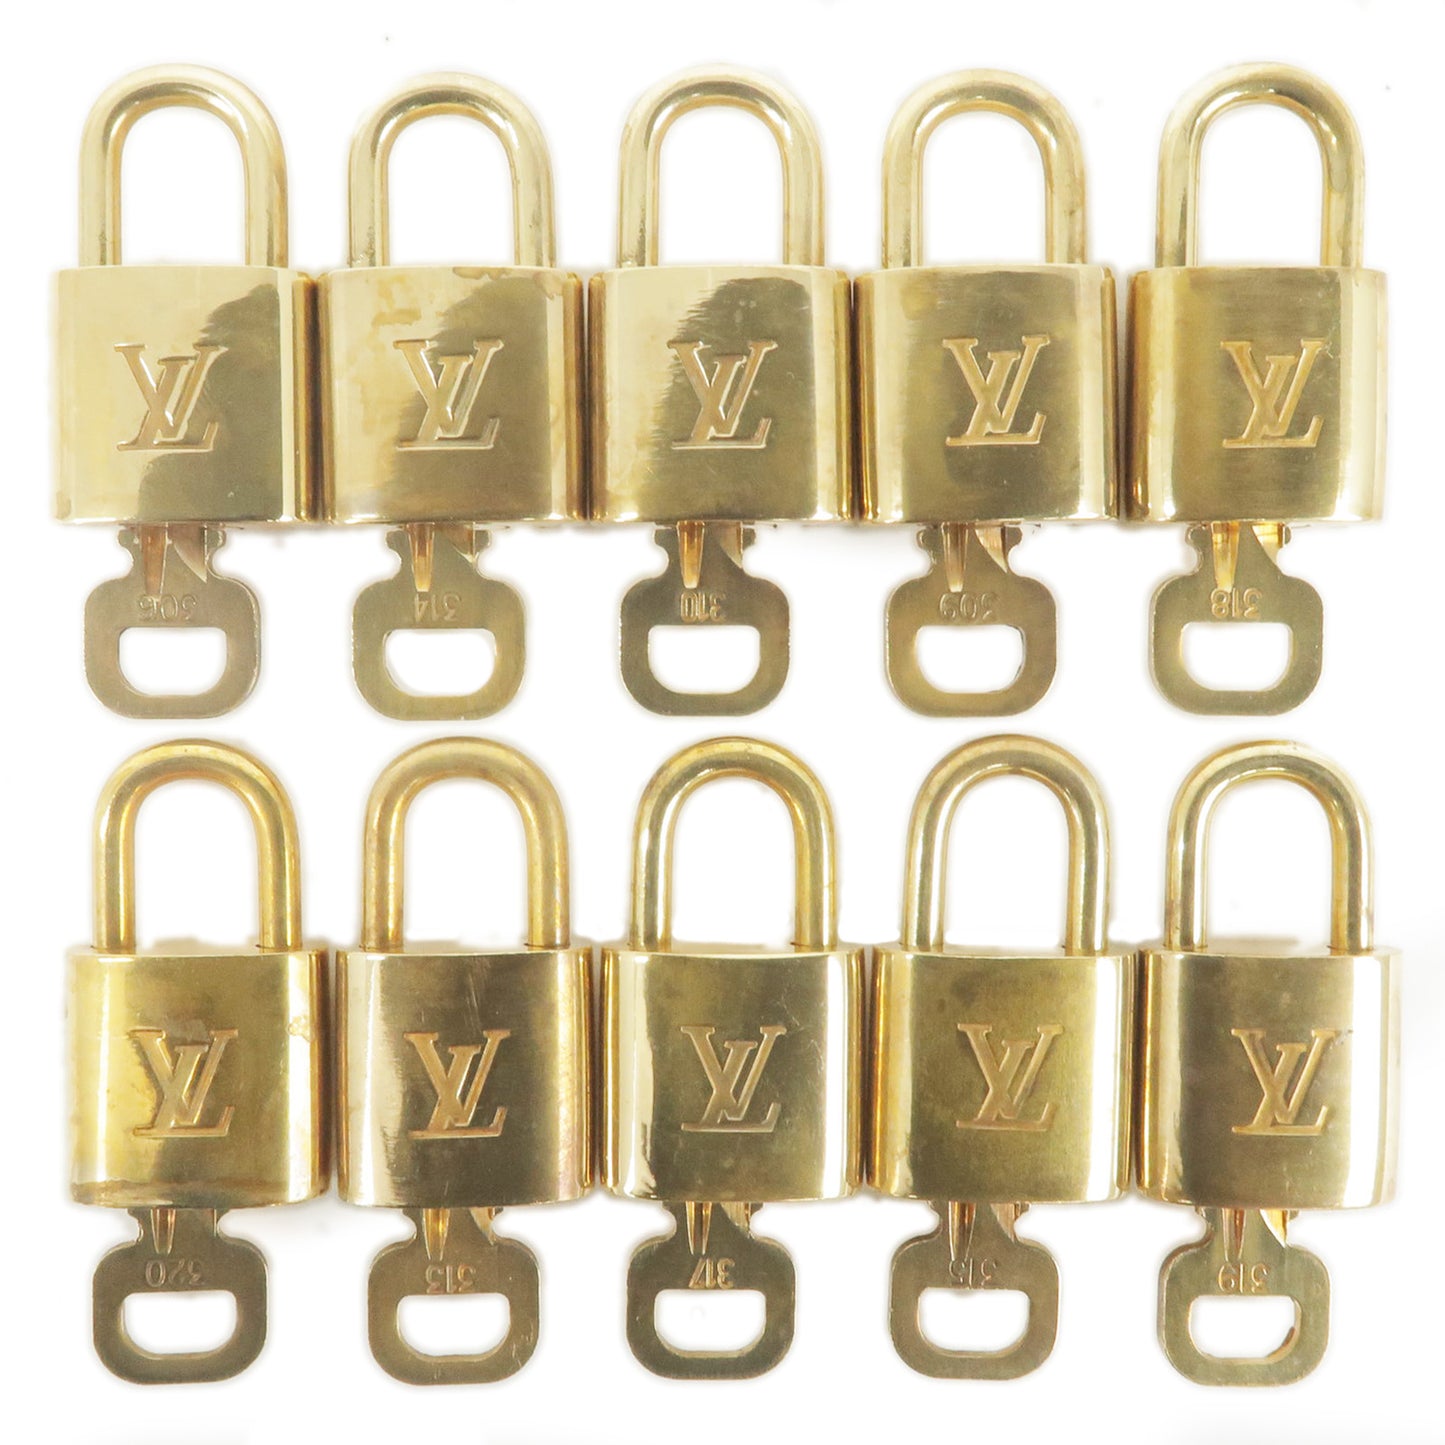 LOUIS VUITTON PadLock Lock & Key Brass Gold Authentic Number 318 No Key  (open)